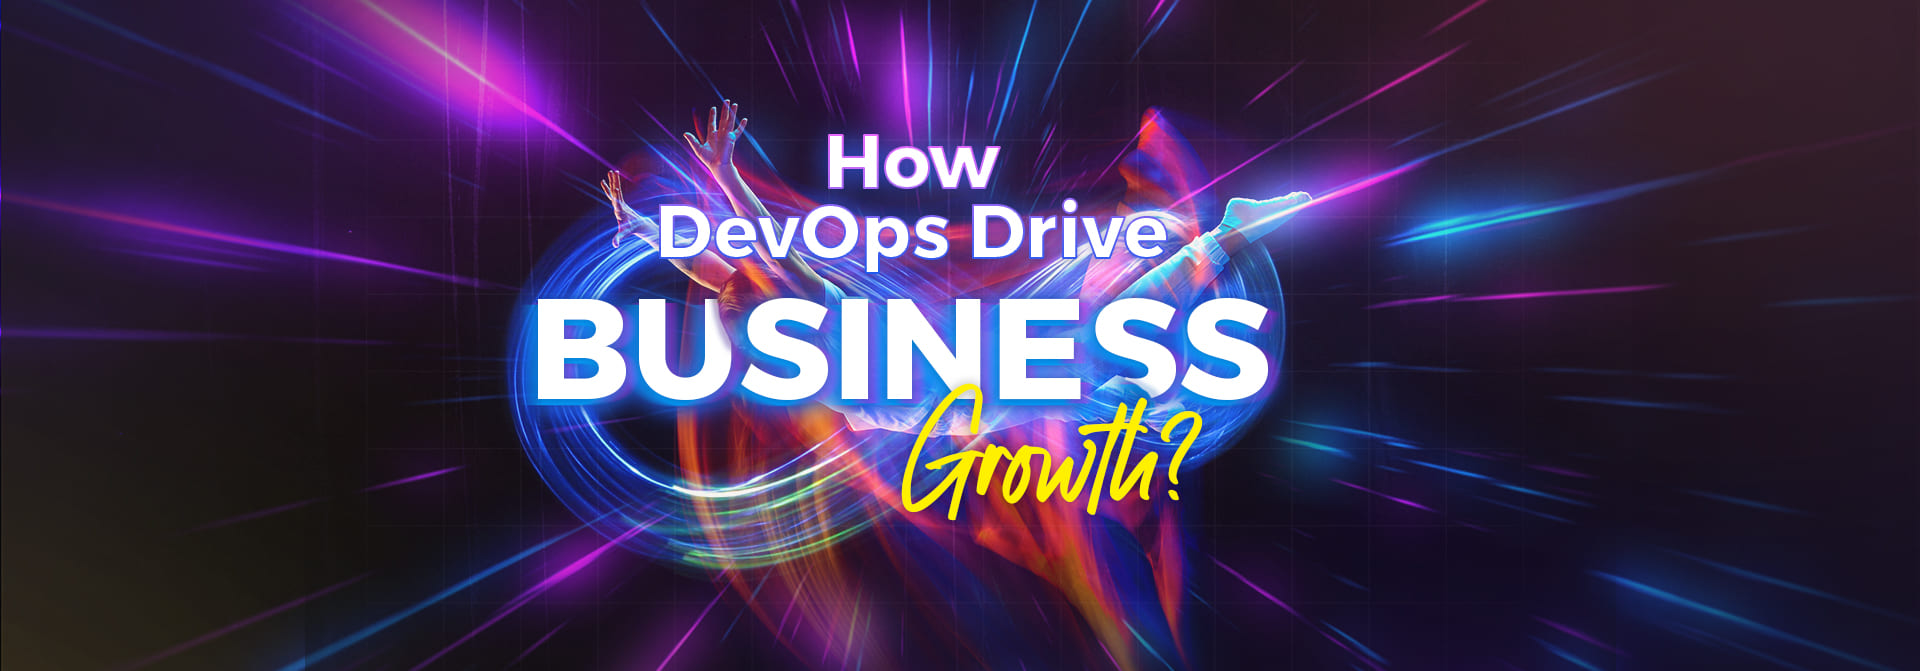 DevOps Drive Business_banner